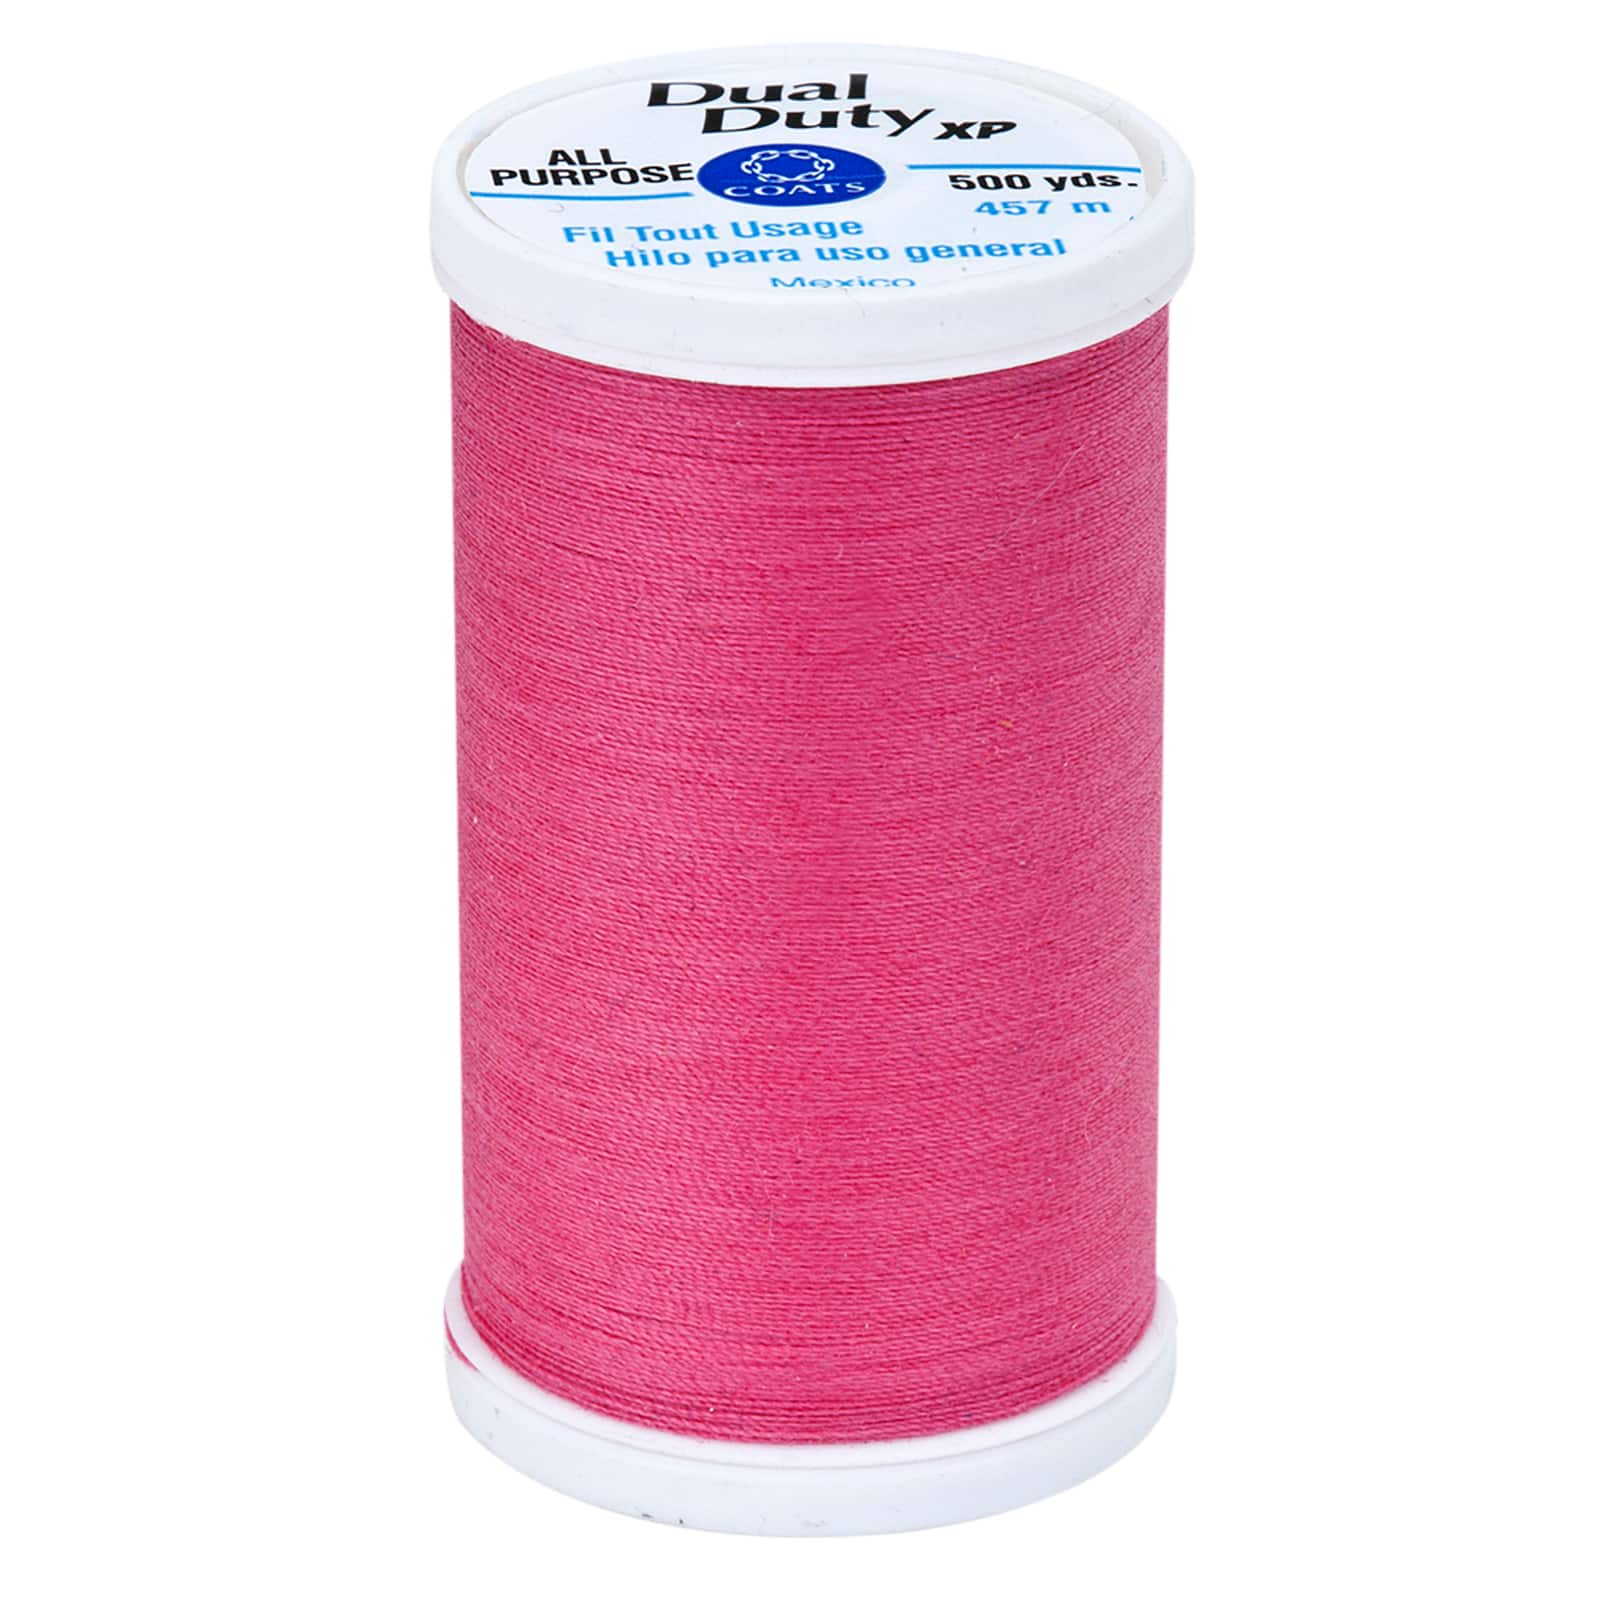 Hot Pink Dual Duty XP General Purpose Thread 500 Yards S930-1840